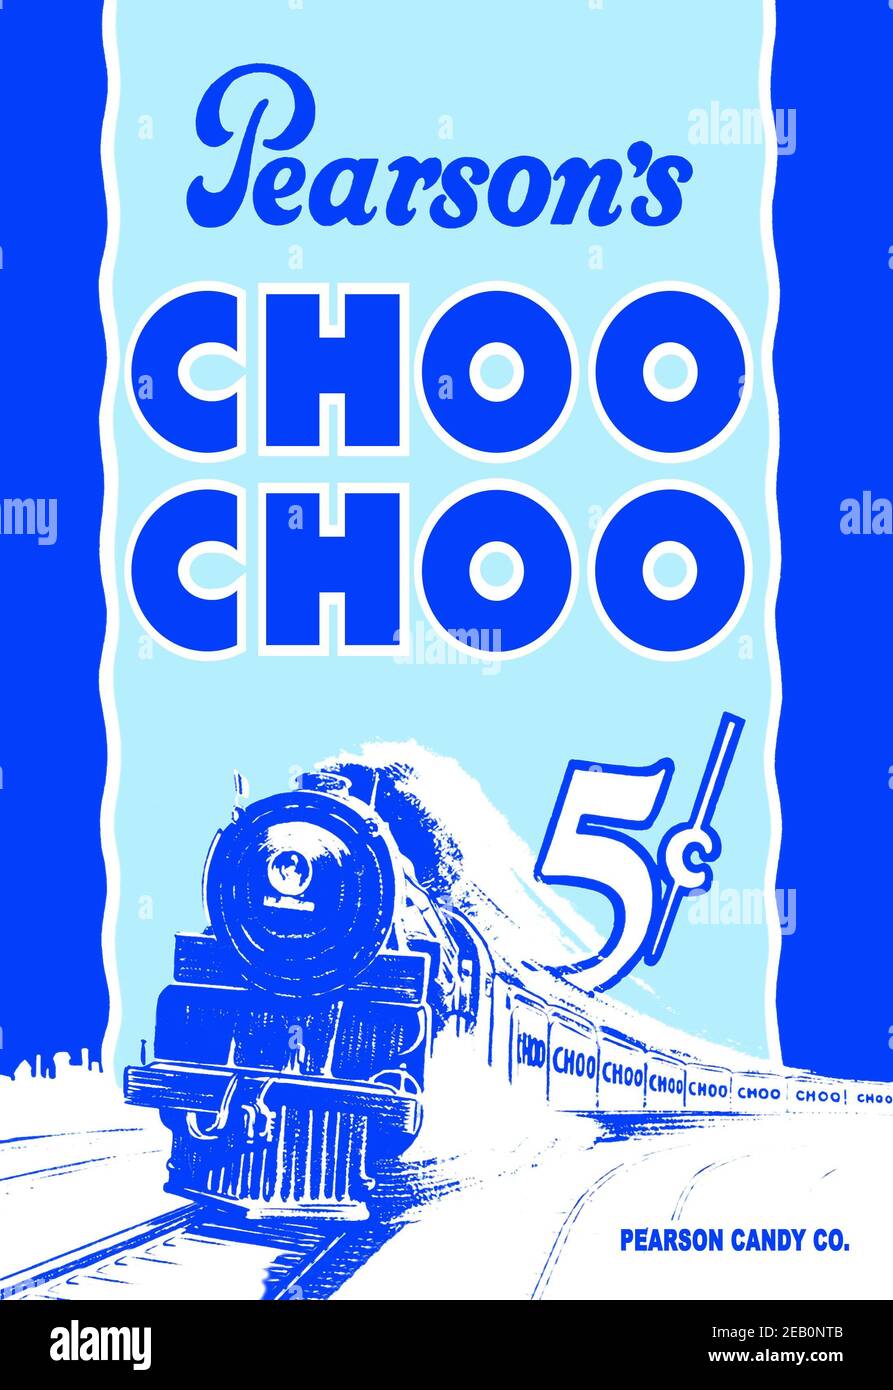 Pearson's Choo Choo Stock Photo